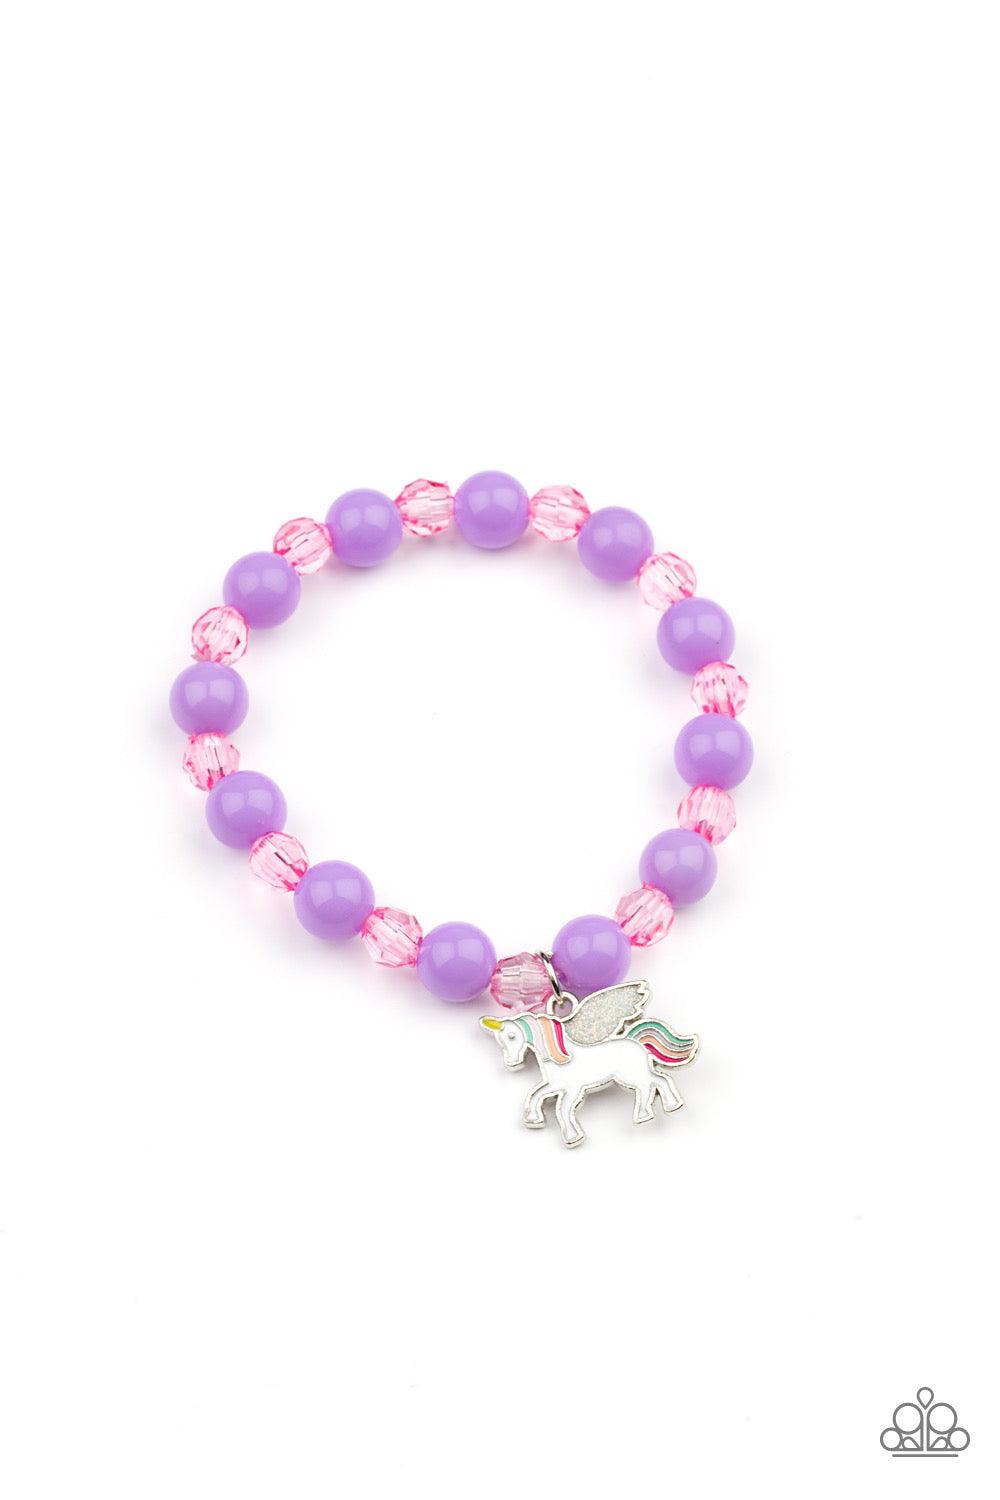 Paparazzi Accessories Starlet Shimmer Bracelet: #19 - Purple Jewelry